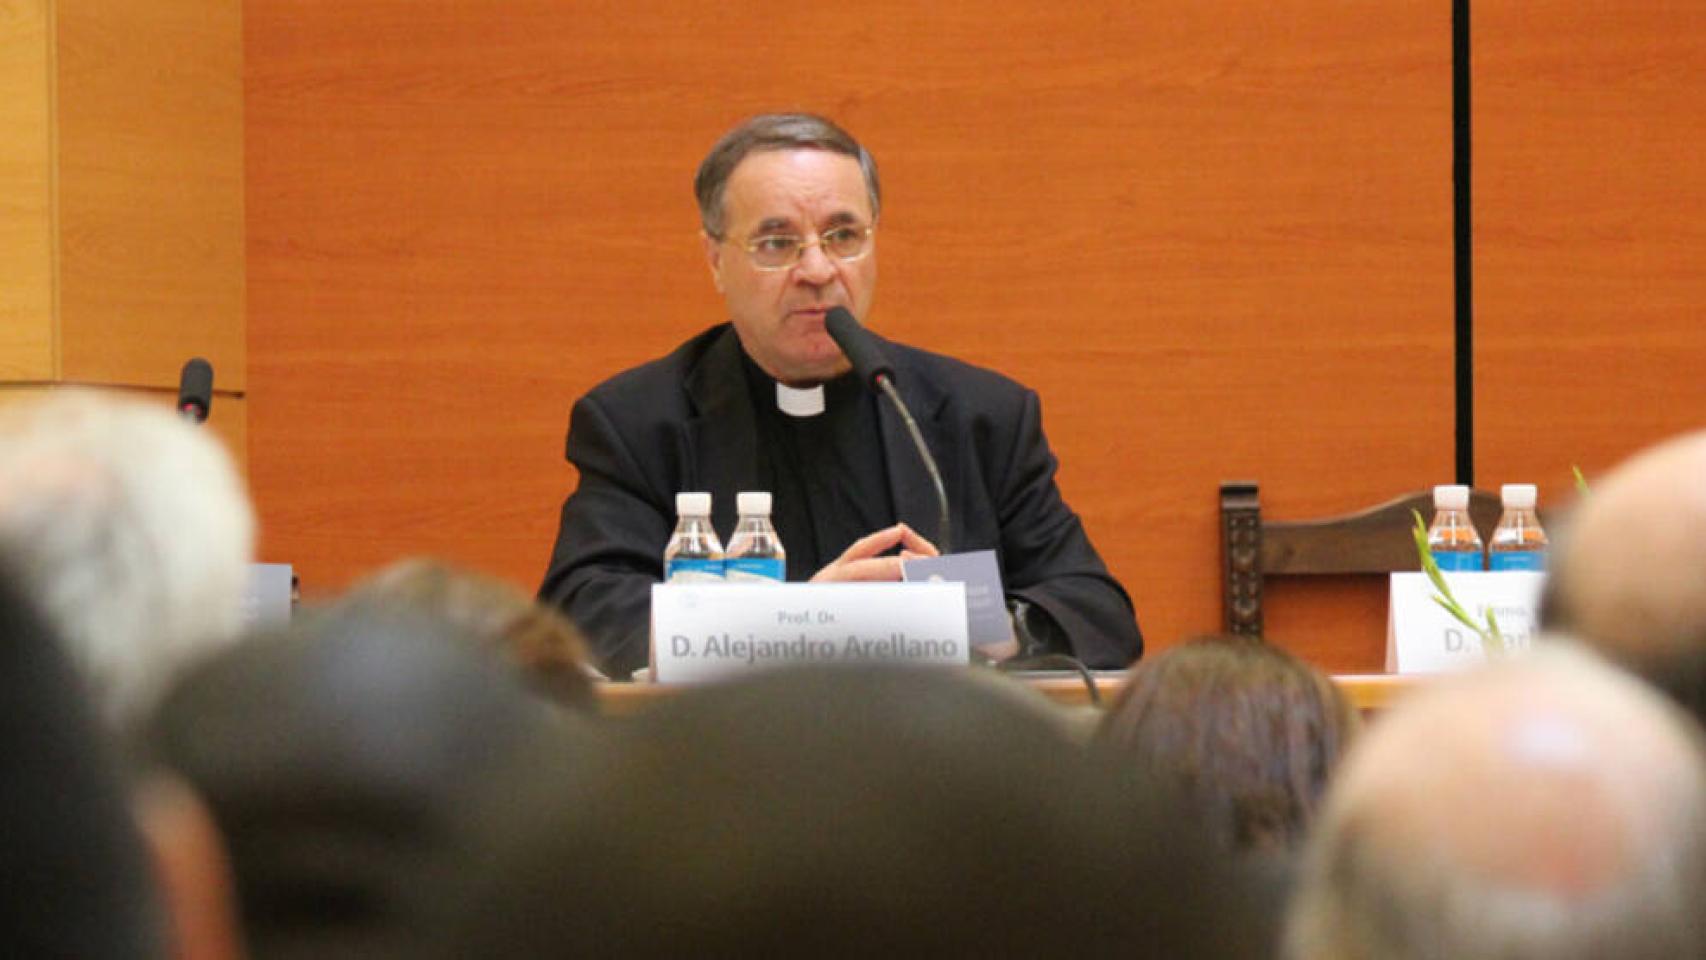 El sacerdote toledano Alejandro Arellano Cedillo (Foto: Universidad San Dámaso)